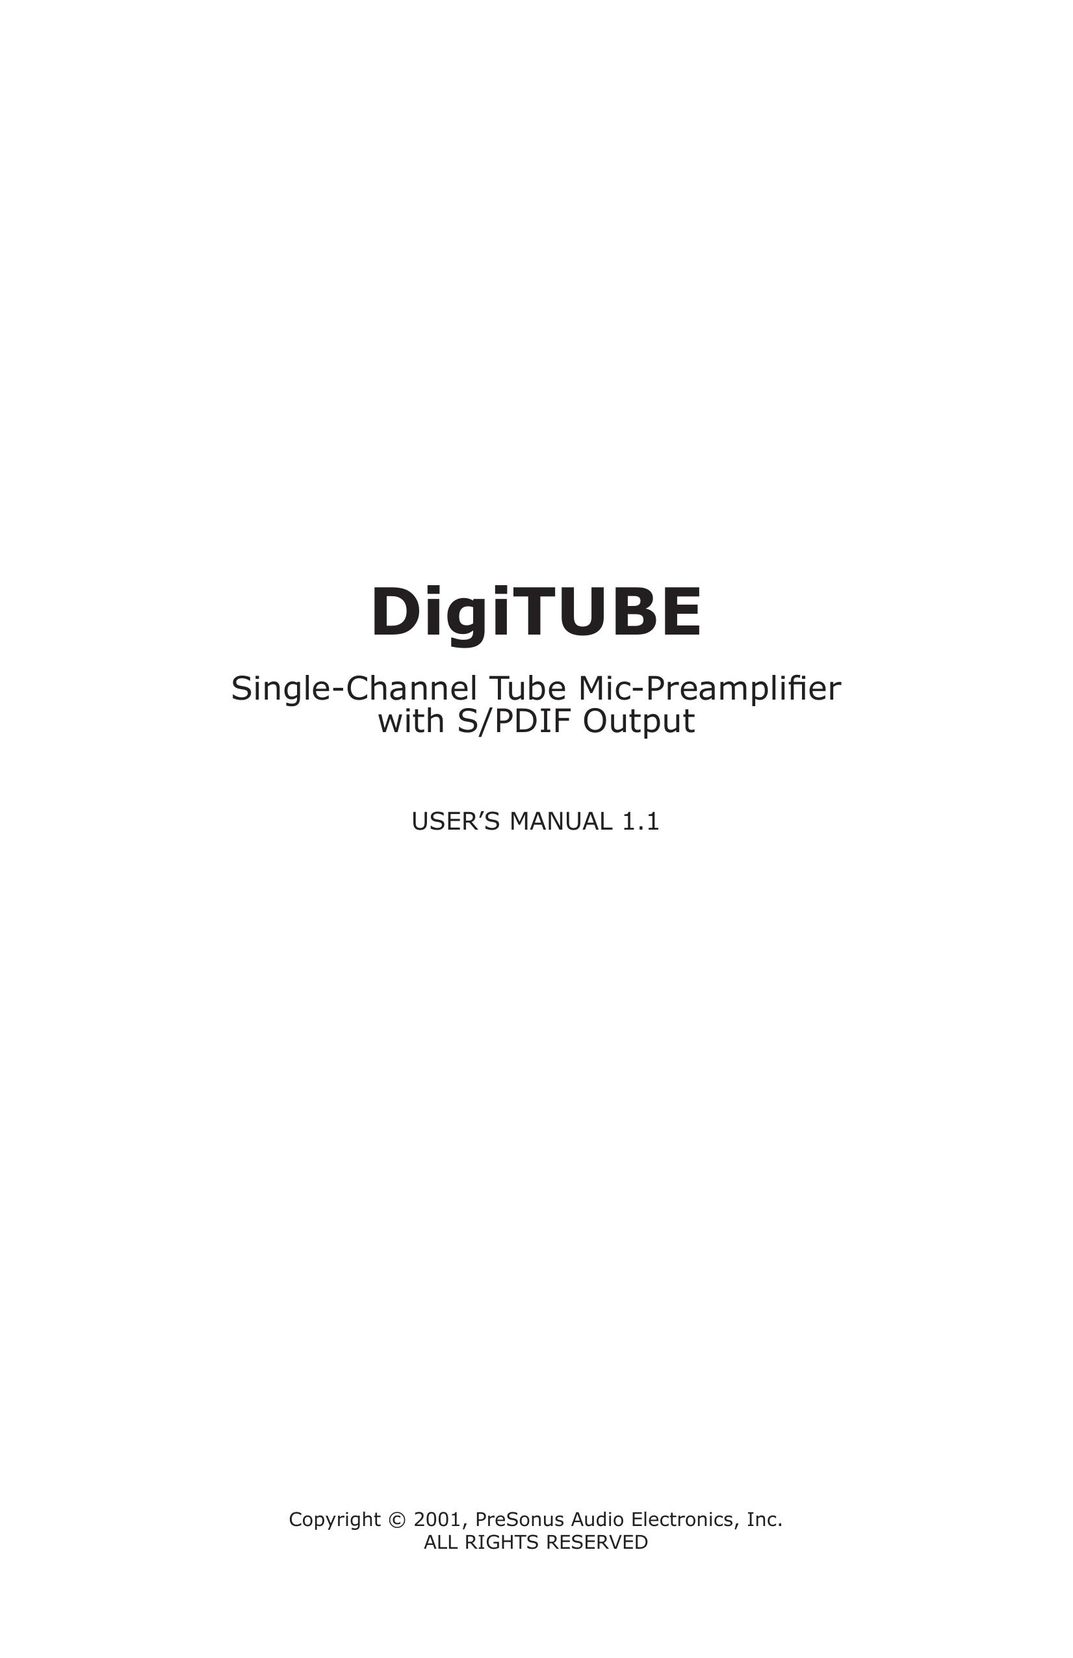 Presonus Audio electronic Single-Channel Tube Stereo Amplifier User Manual